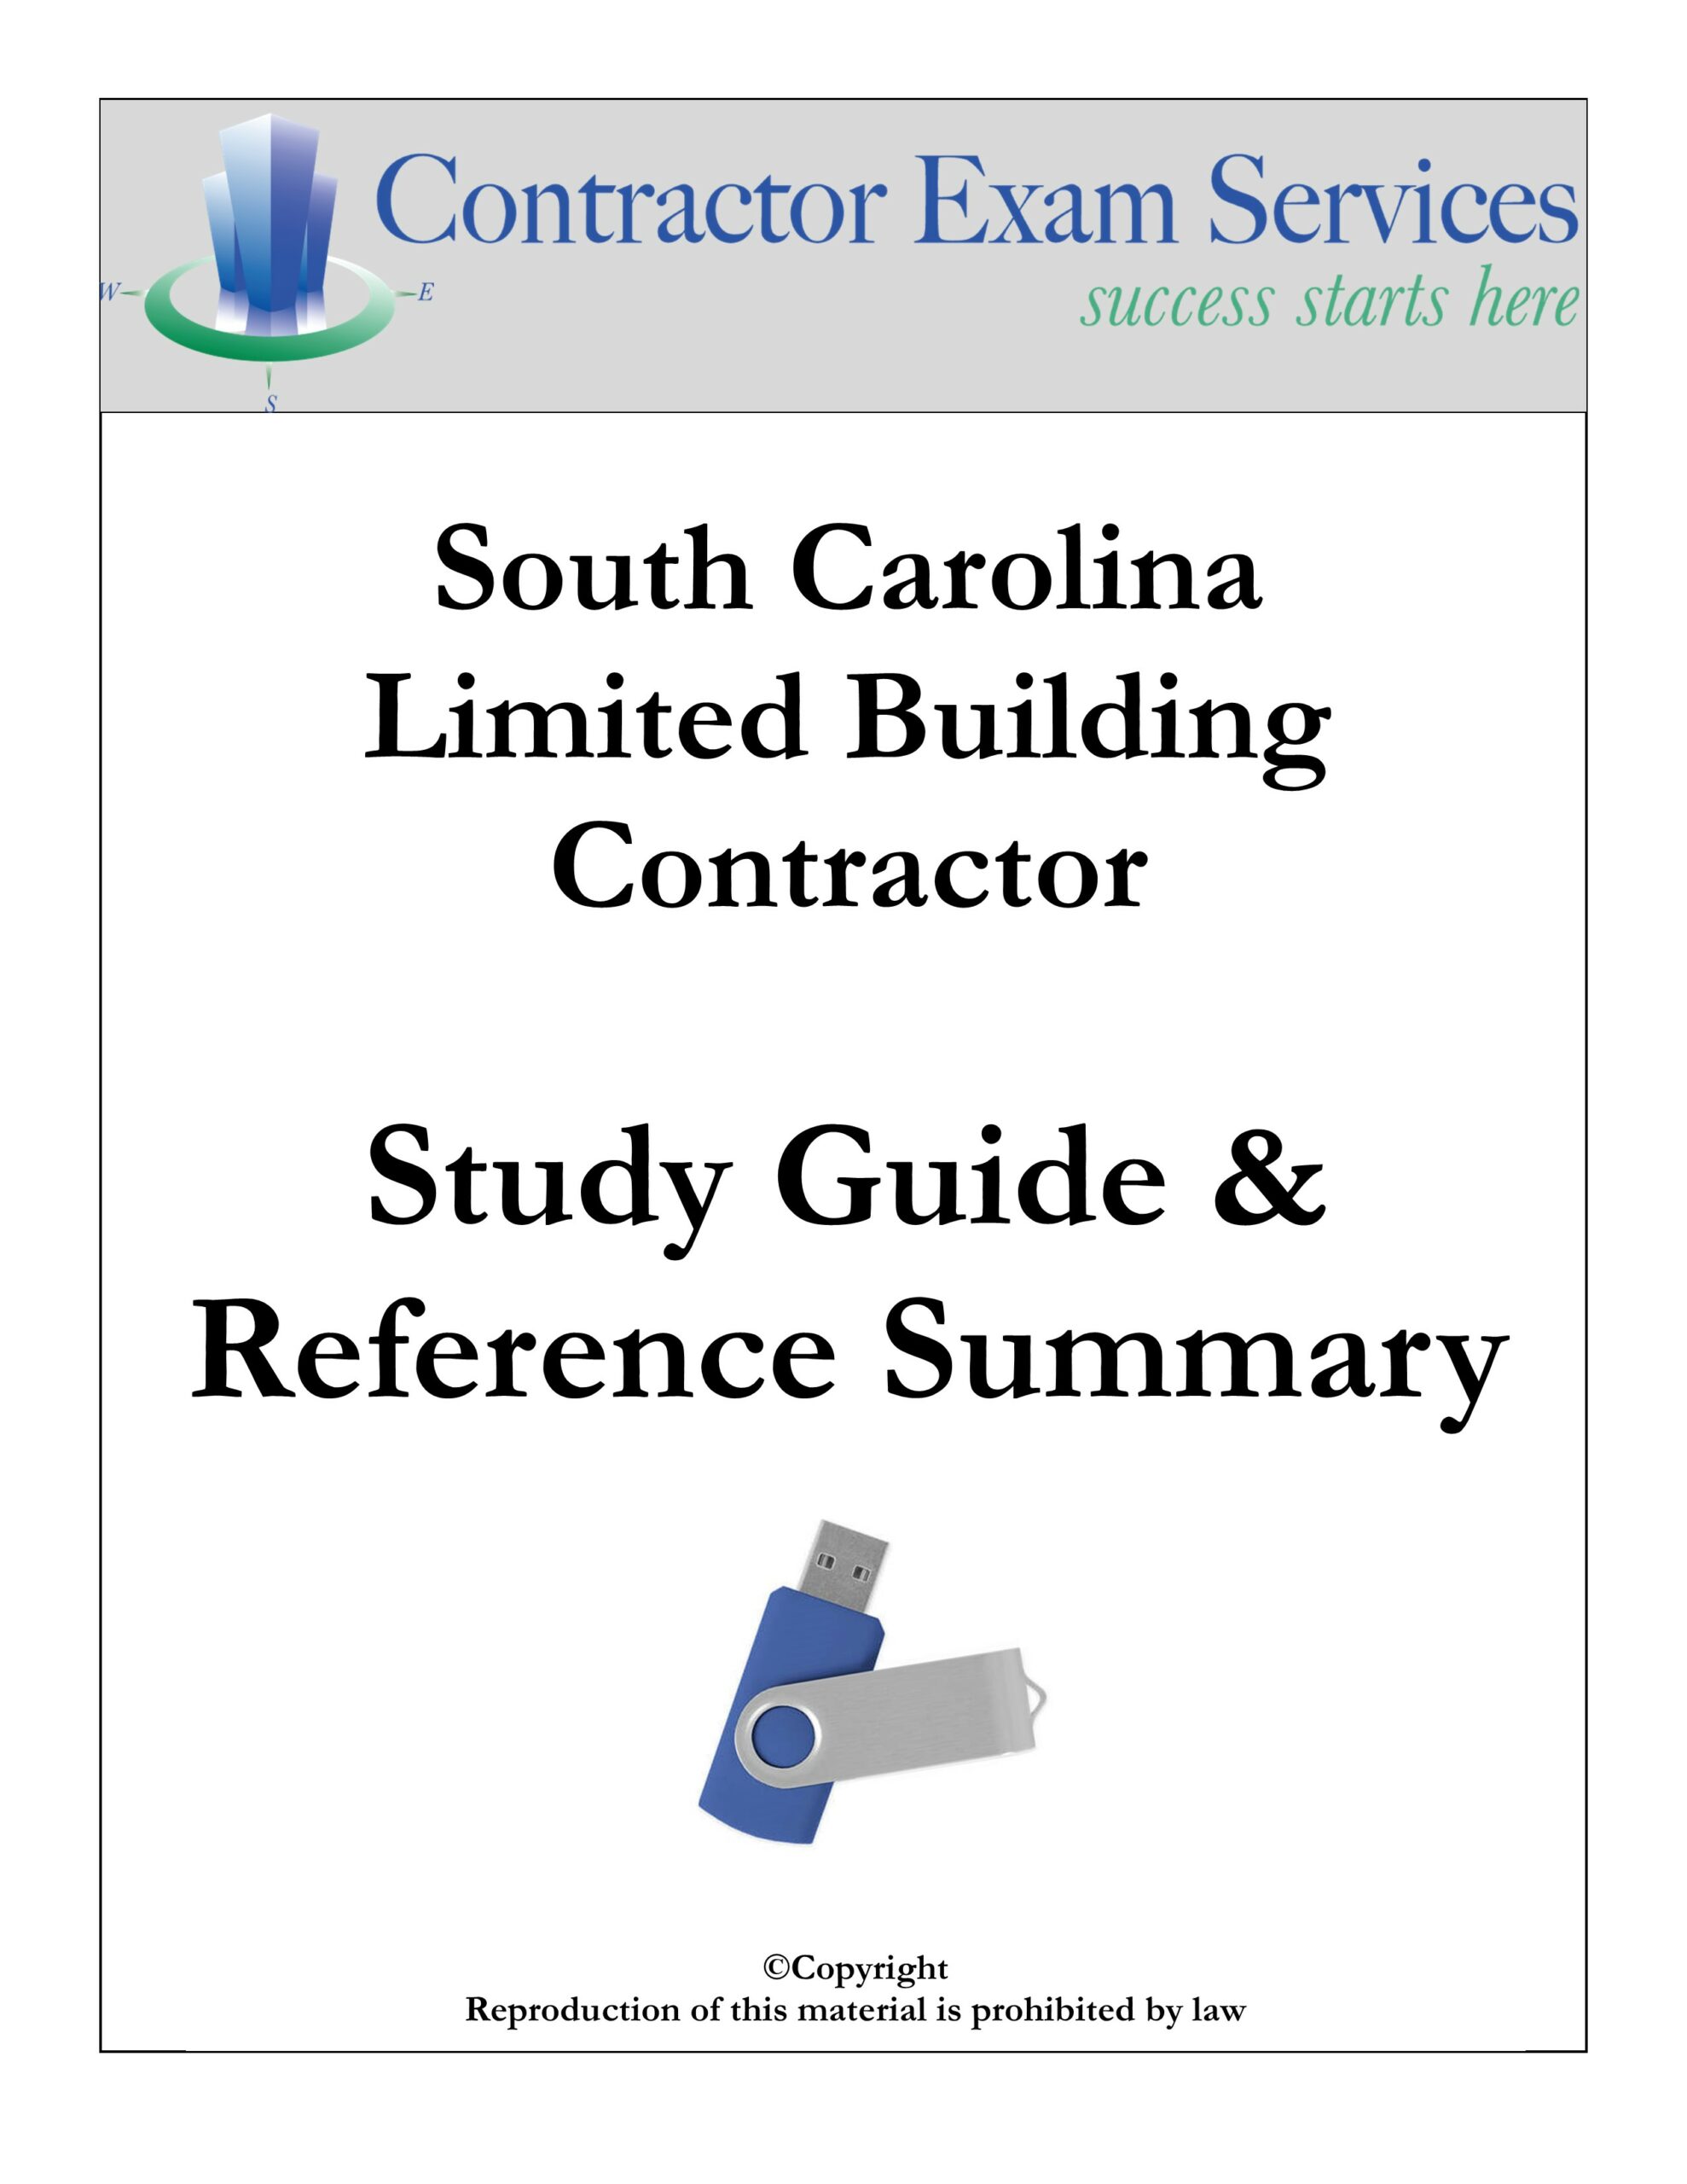 At Home Seminar and Study Guide CD Course - South Carolina